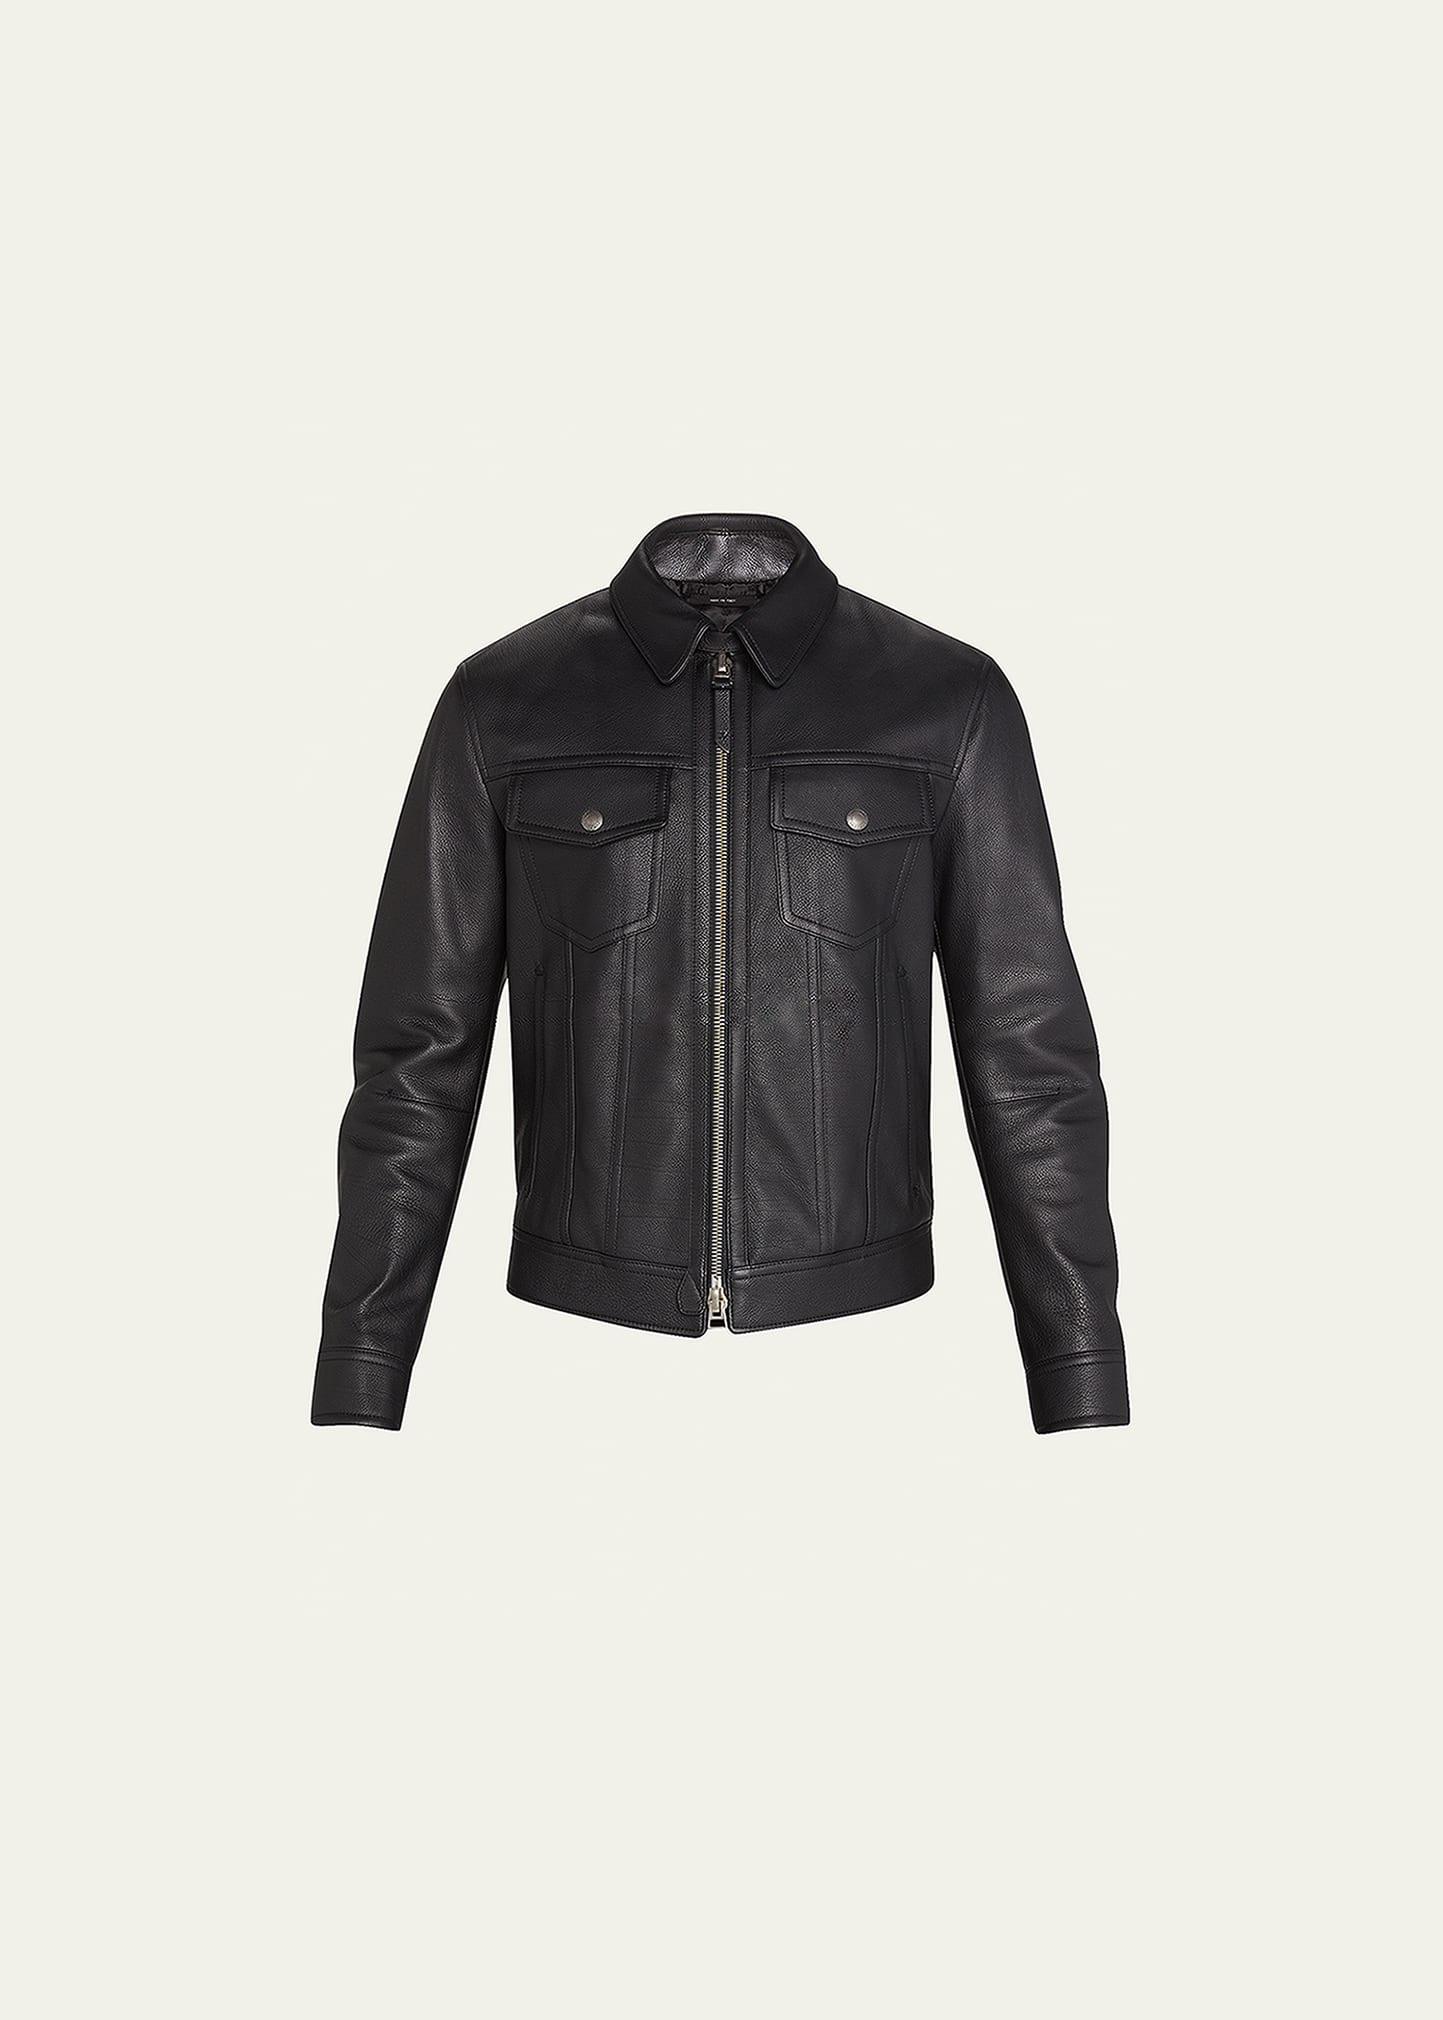 Leather Jacket Outerwear | bergdorfgoodman.com